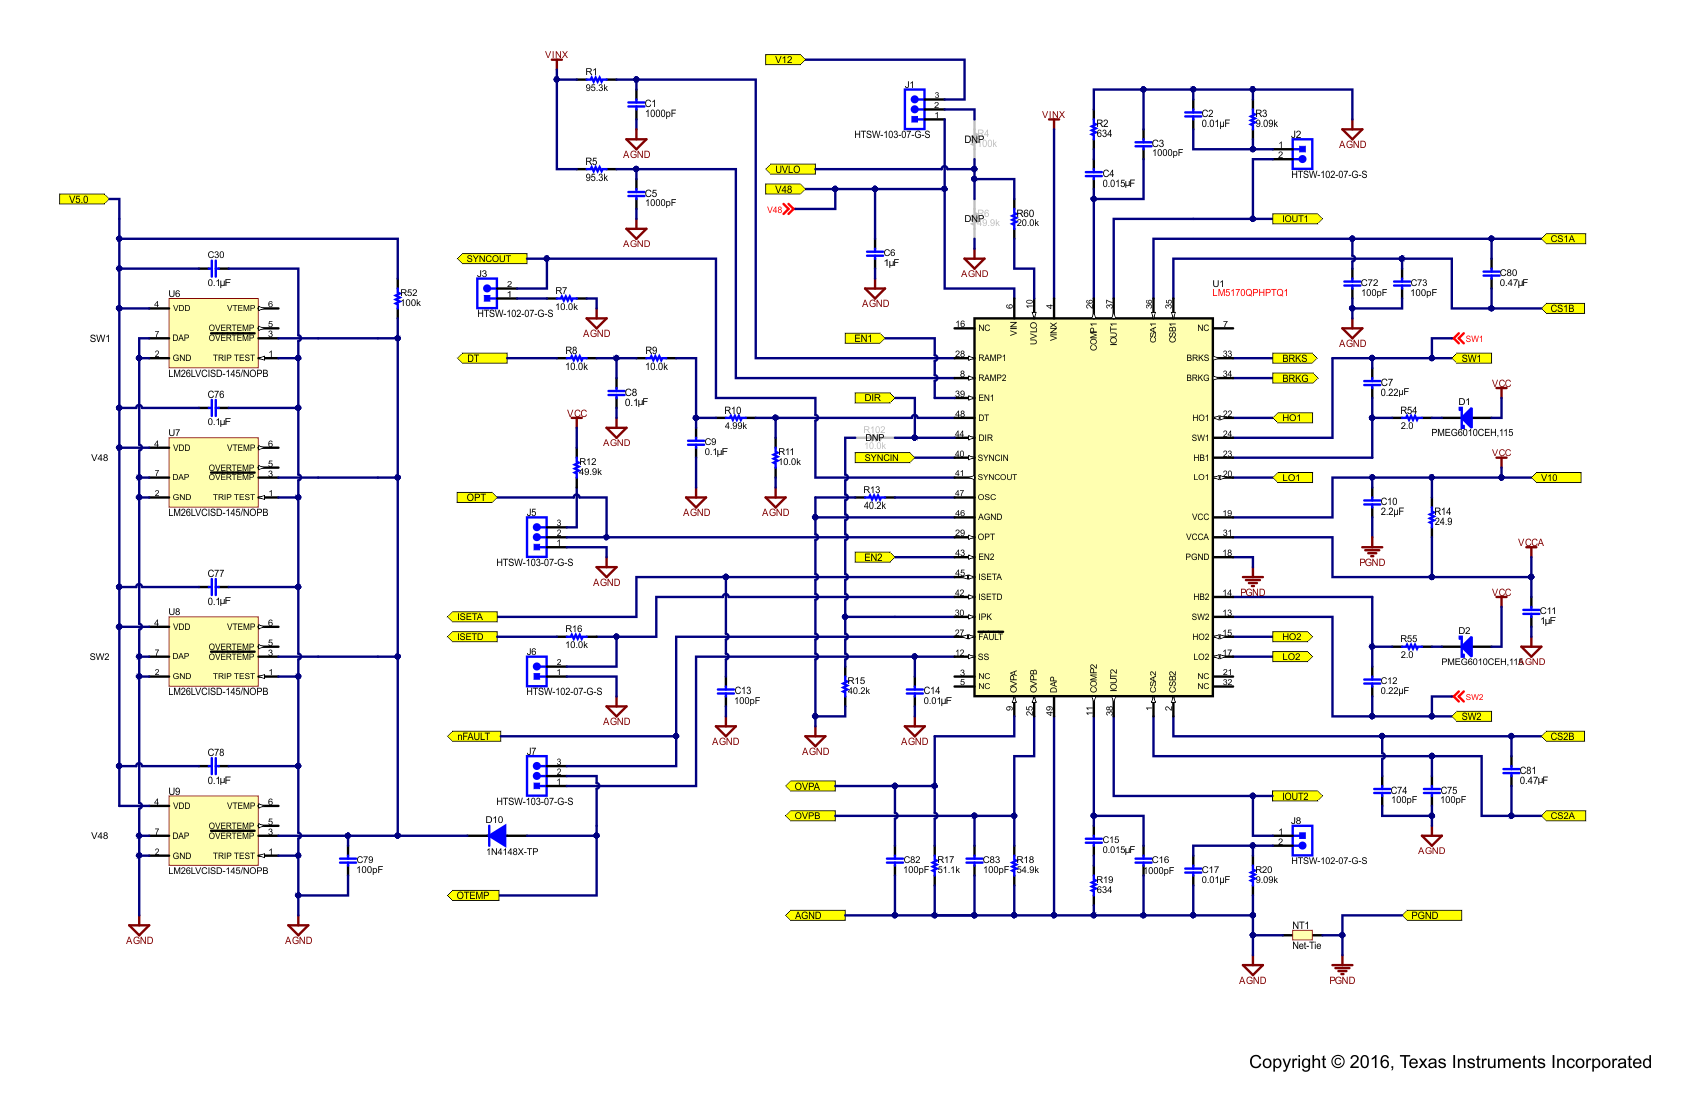 schematic_power_02_controller_snvu543.png